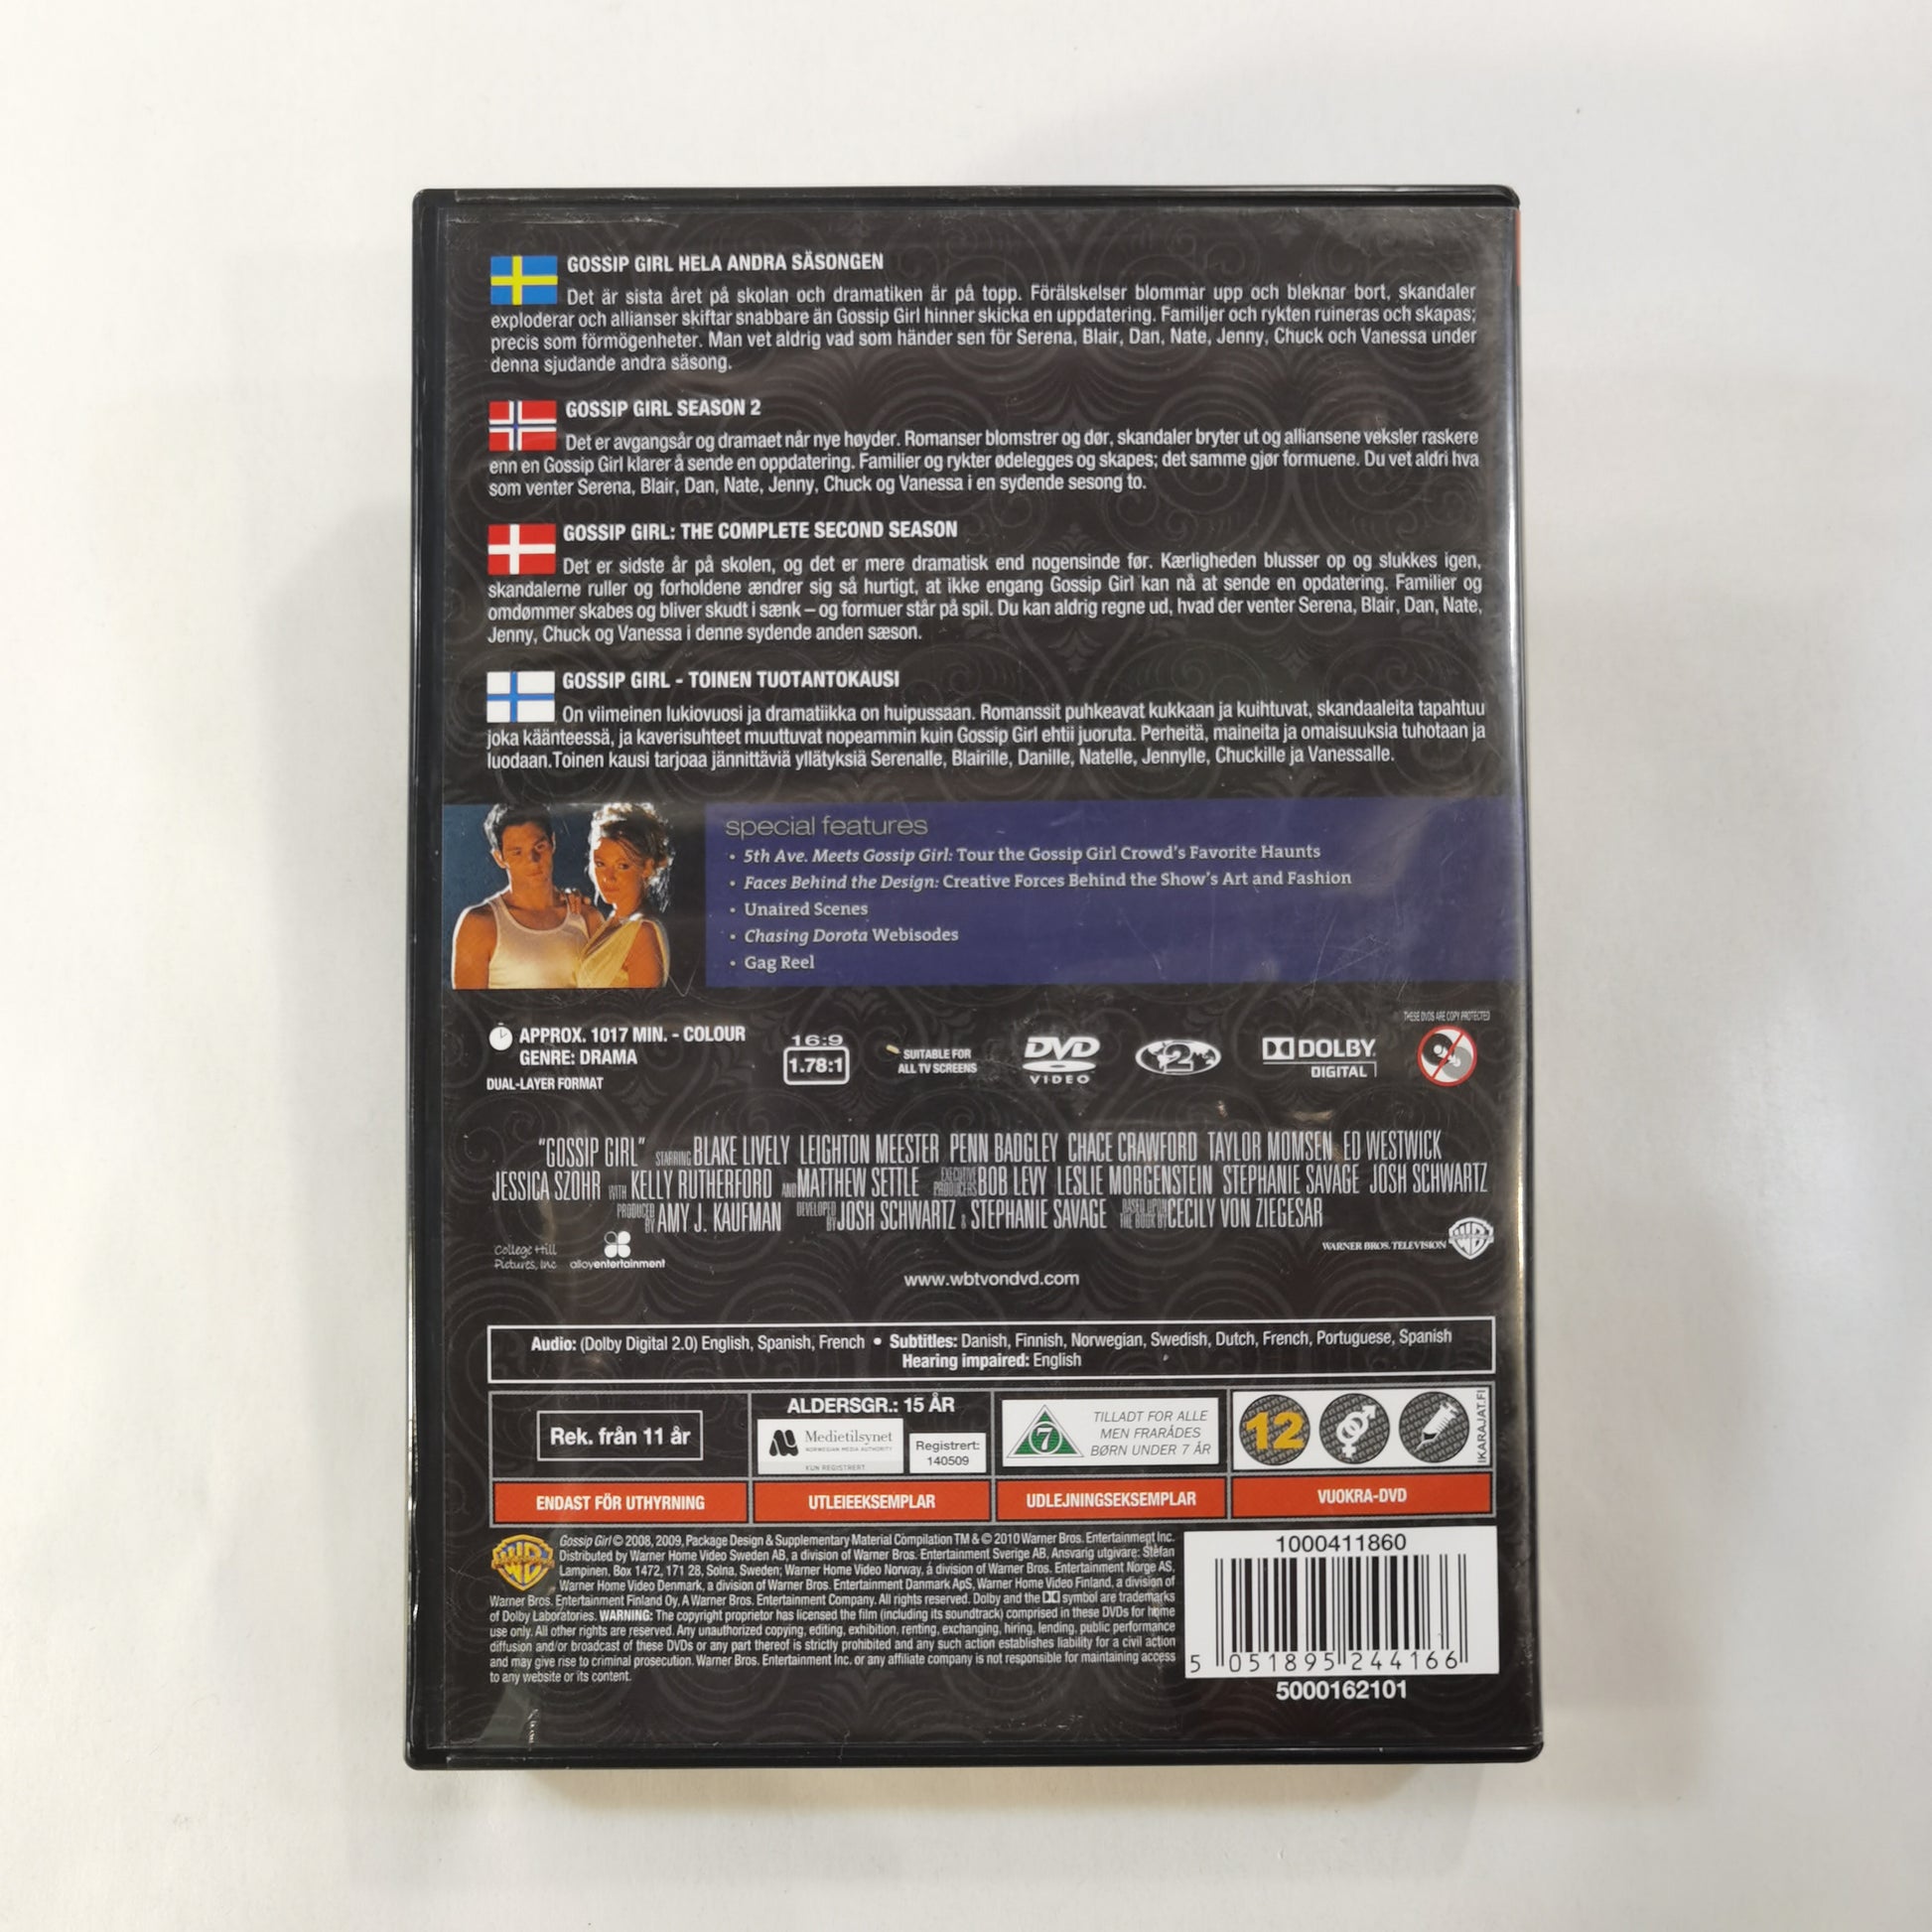 Gossip Girl: Series 2 (2008) - DVD SE NO DK FI 2010